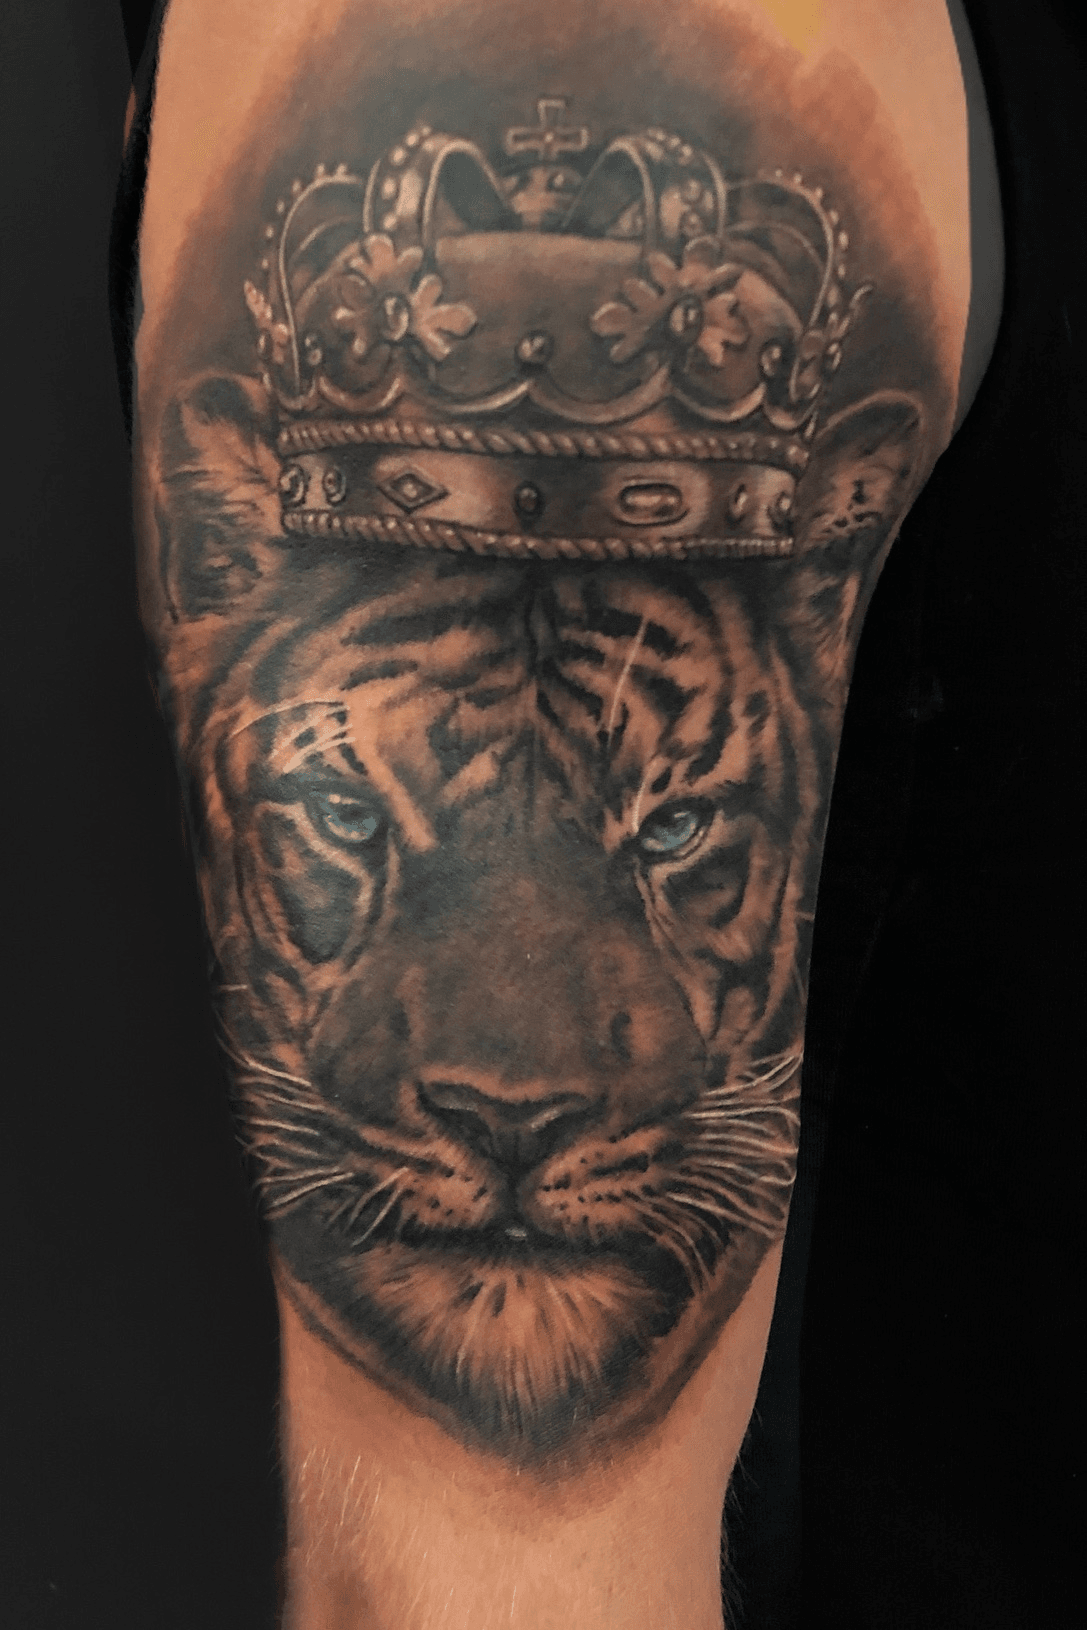 Yesterday tattoo tiger tattoo with crown tattoo design in new concept hope  u like ankittattooartist ankitinkzonetattoos ankh To  Instagram